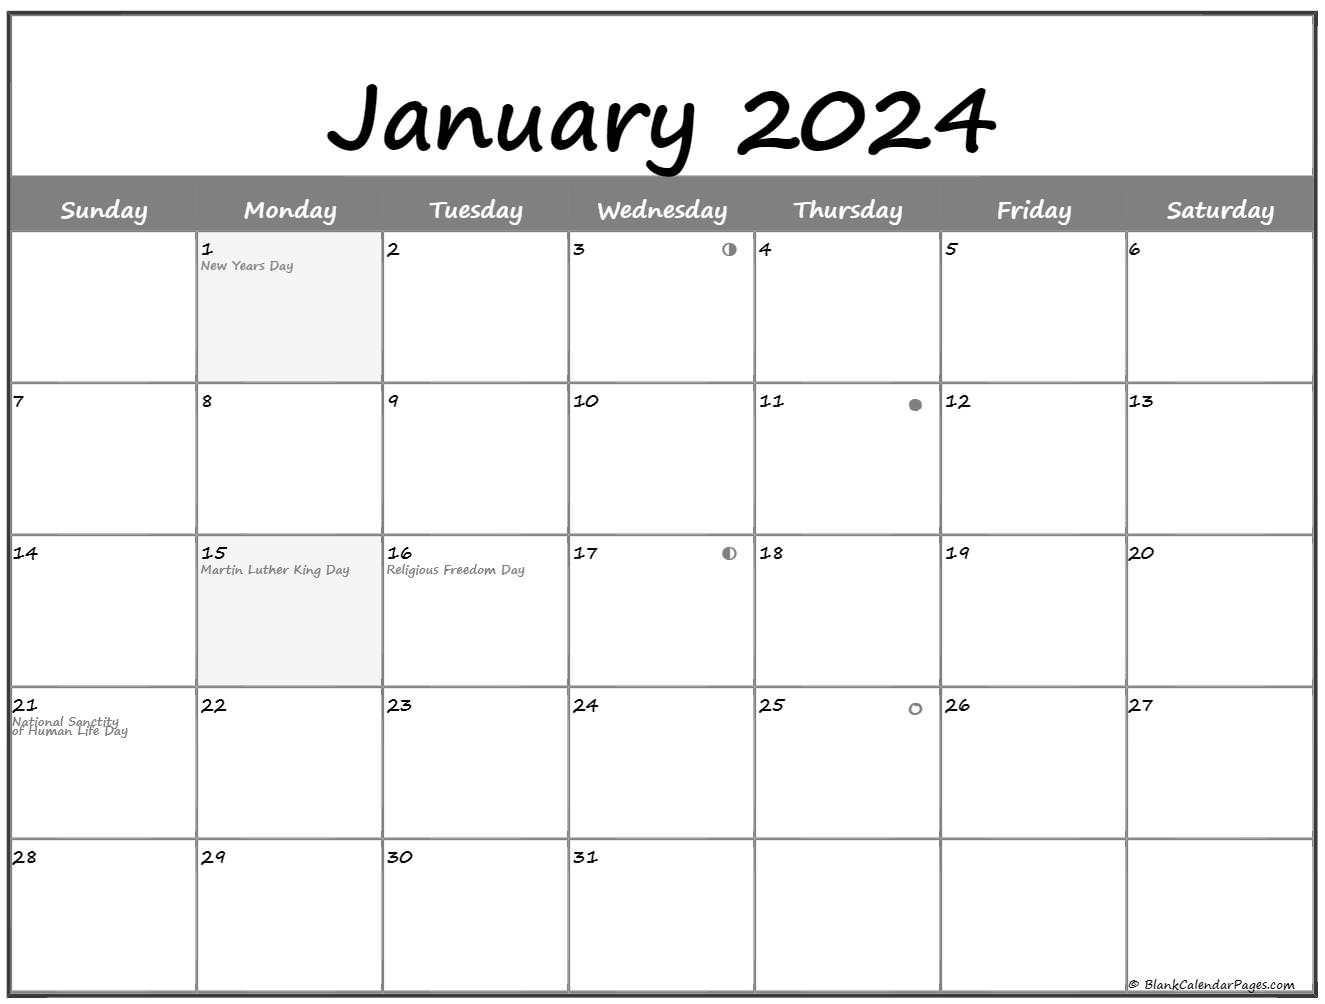 January 2024 Calendar By Week Best Latest Incredible Calendar January